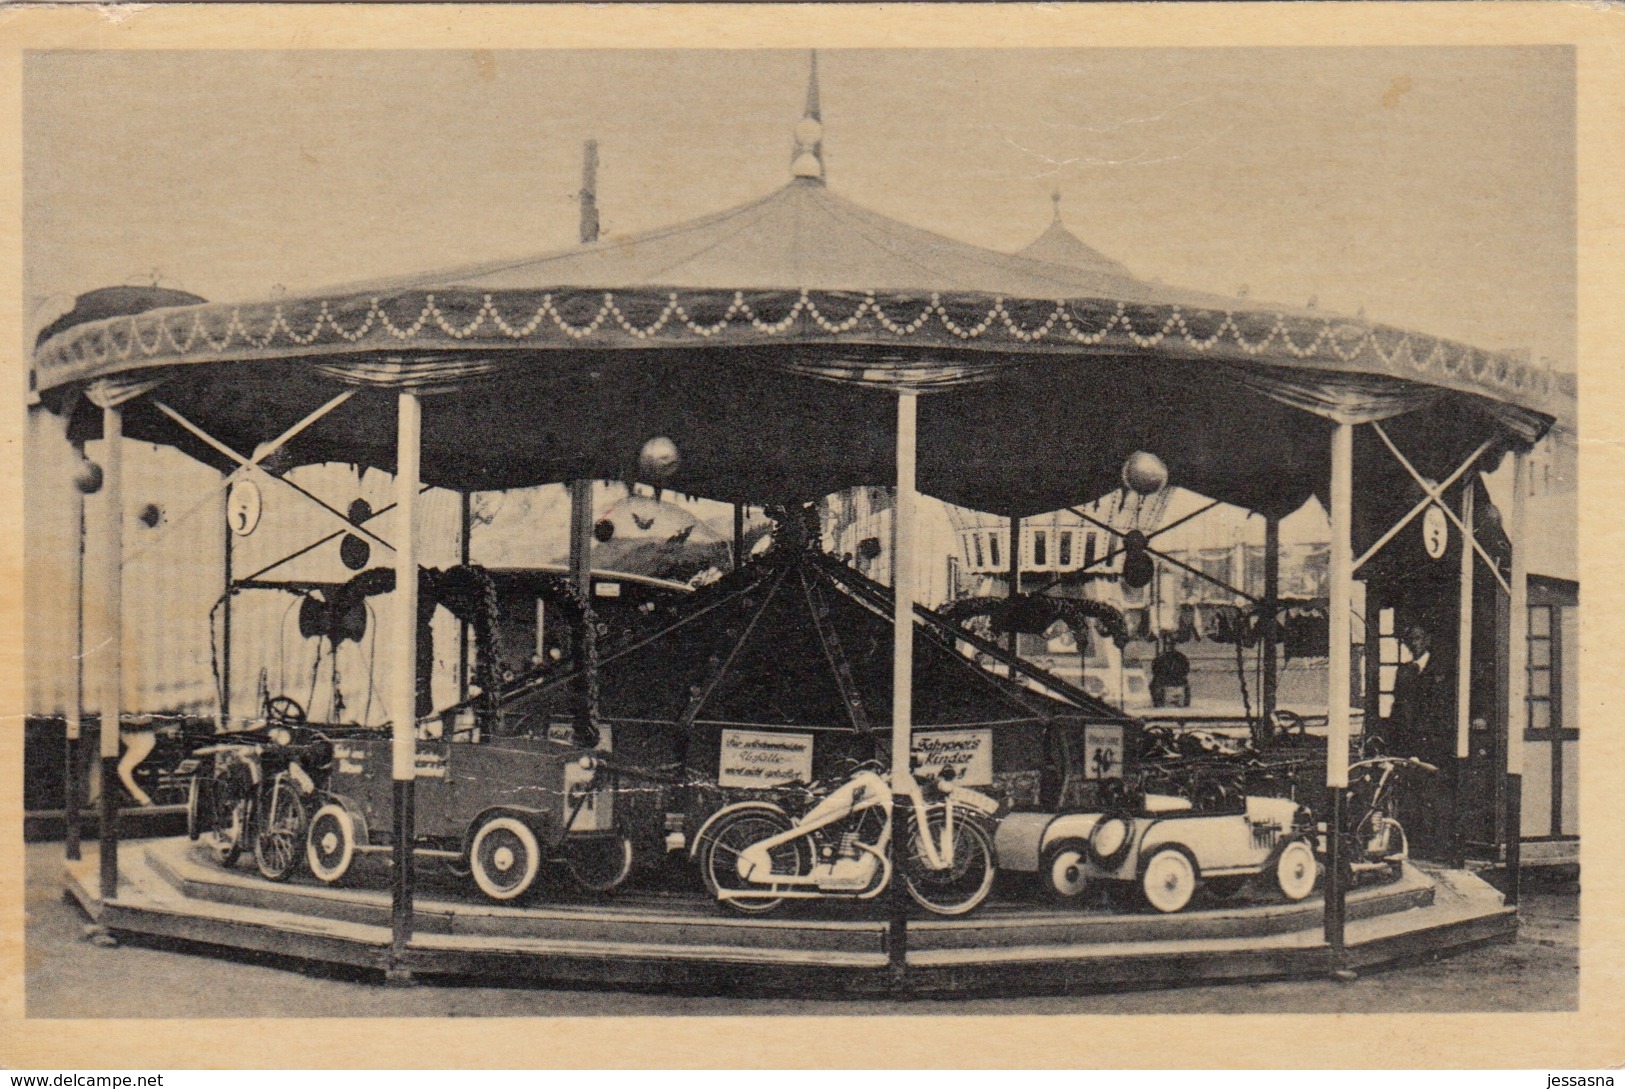 AK - Altes Ringelspiel (Karussell) - 30iger Jahre - Circus